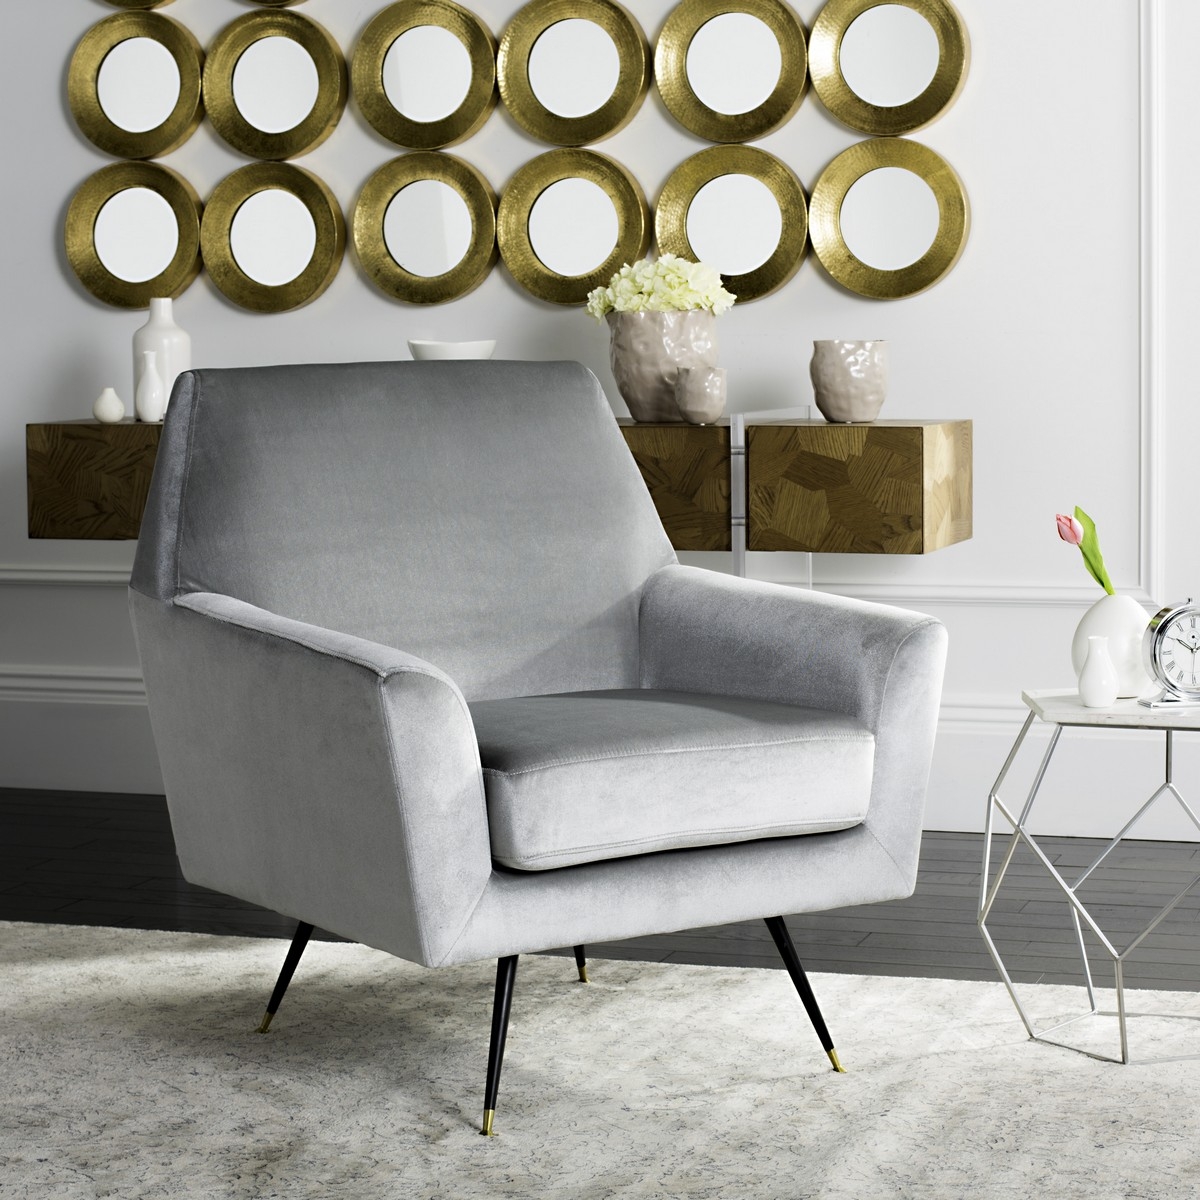 Nynette Velvet Retro Mid Century Accent Chair -  Light Grey - Arlo Home - Image 1